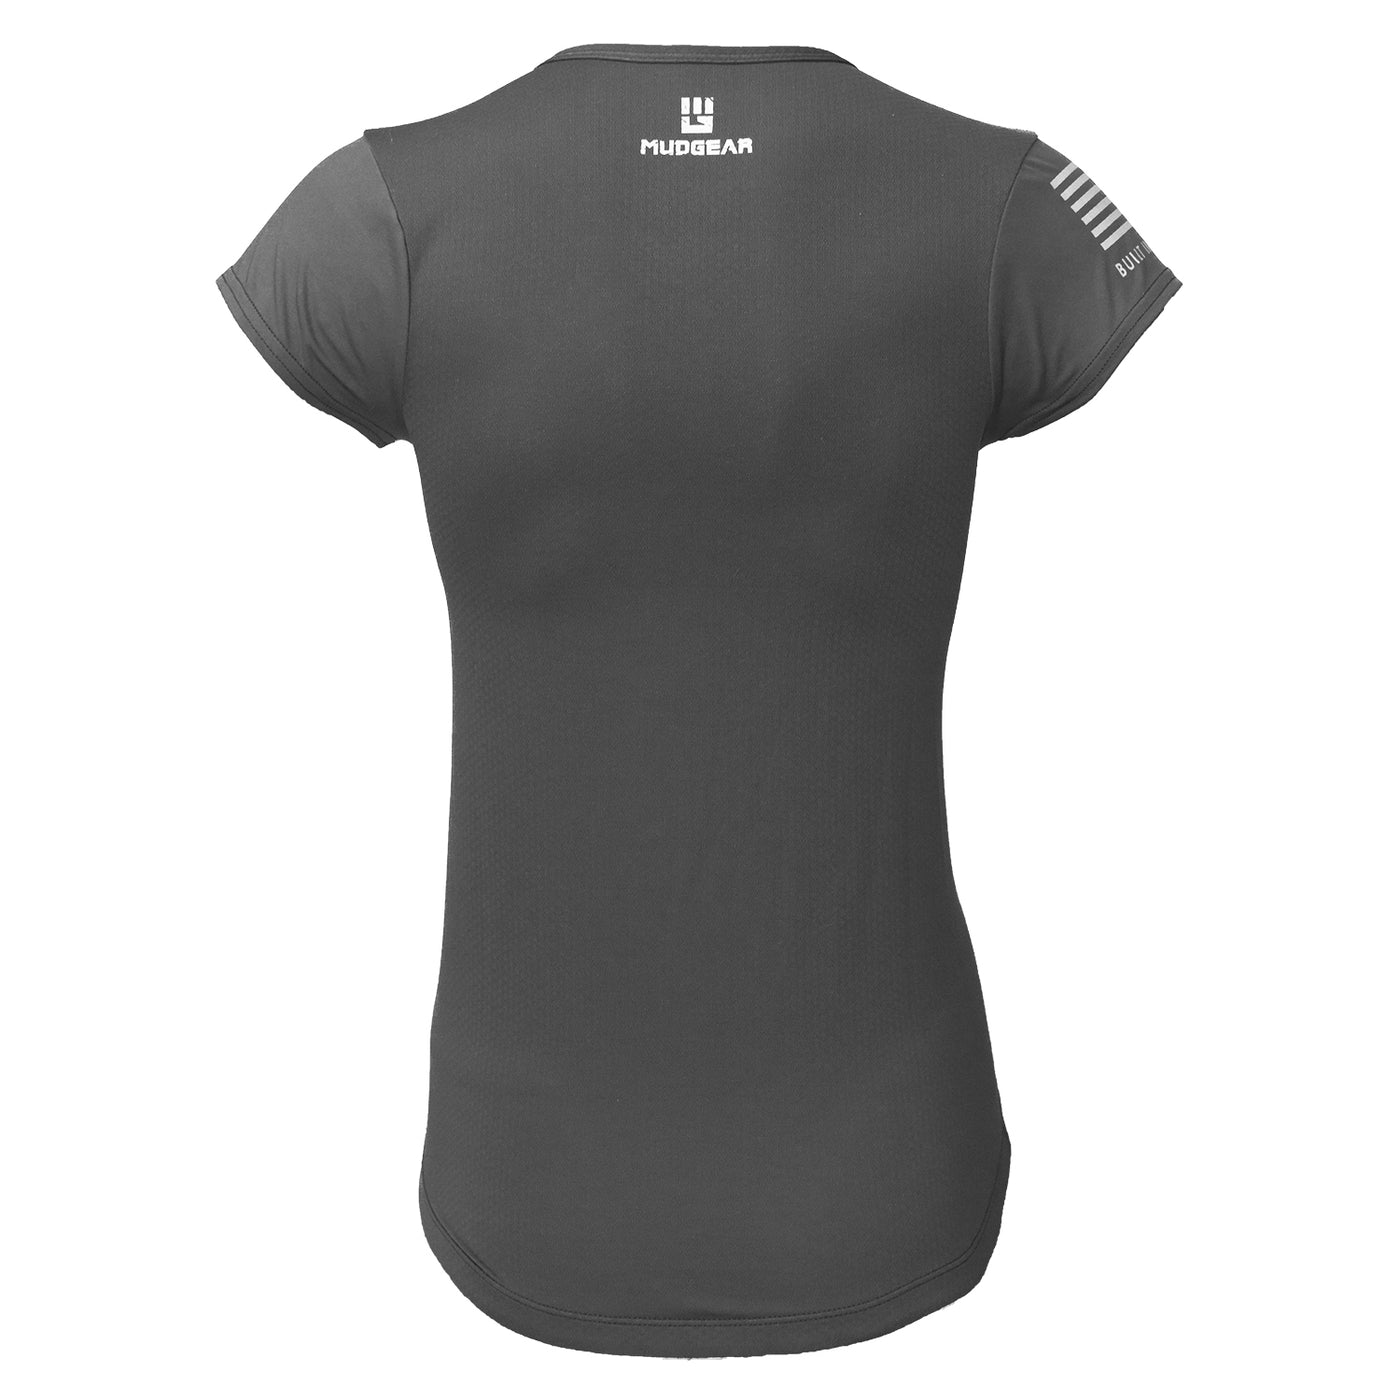 Mudgear Women’s Fitted Performance Shirt - Short Sleeve Back (Gray)